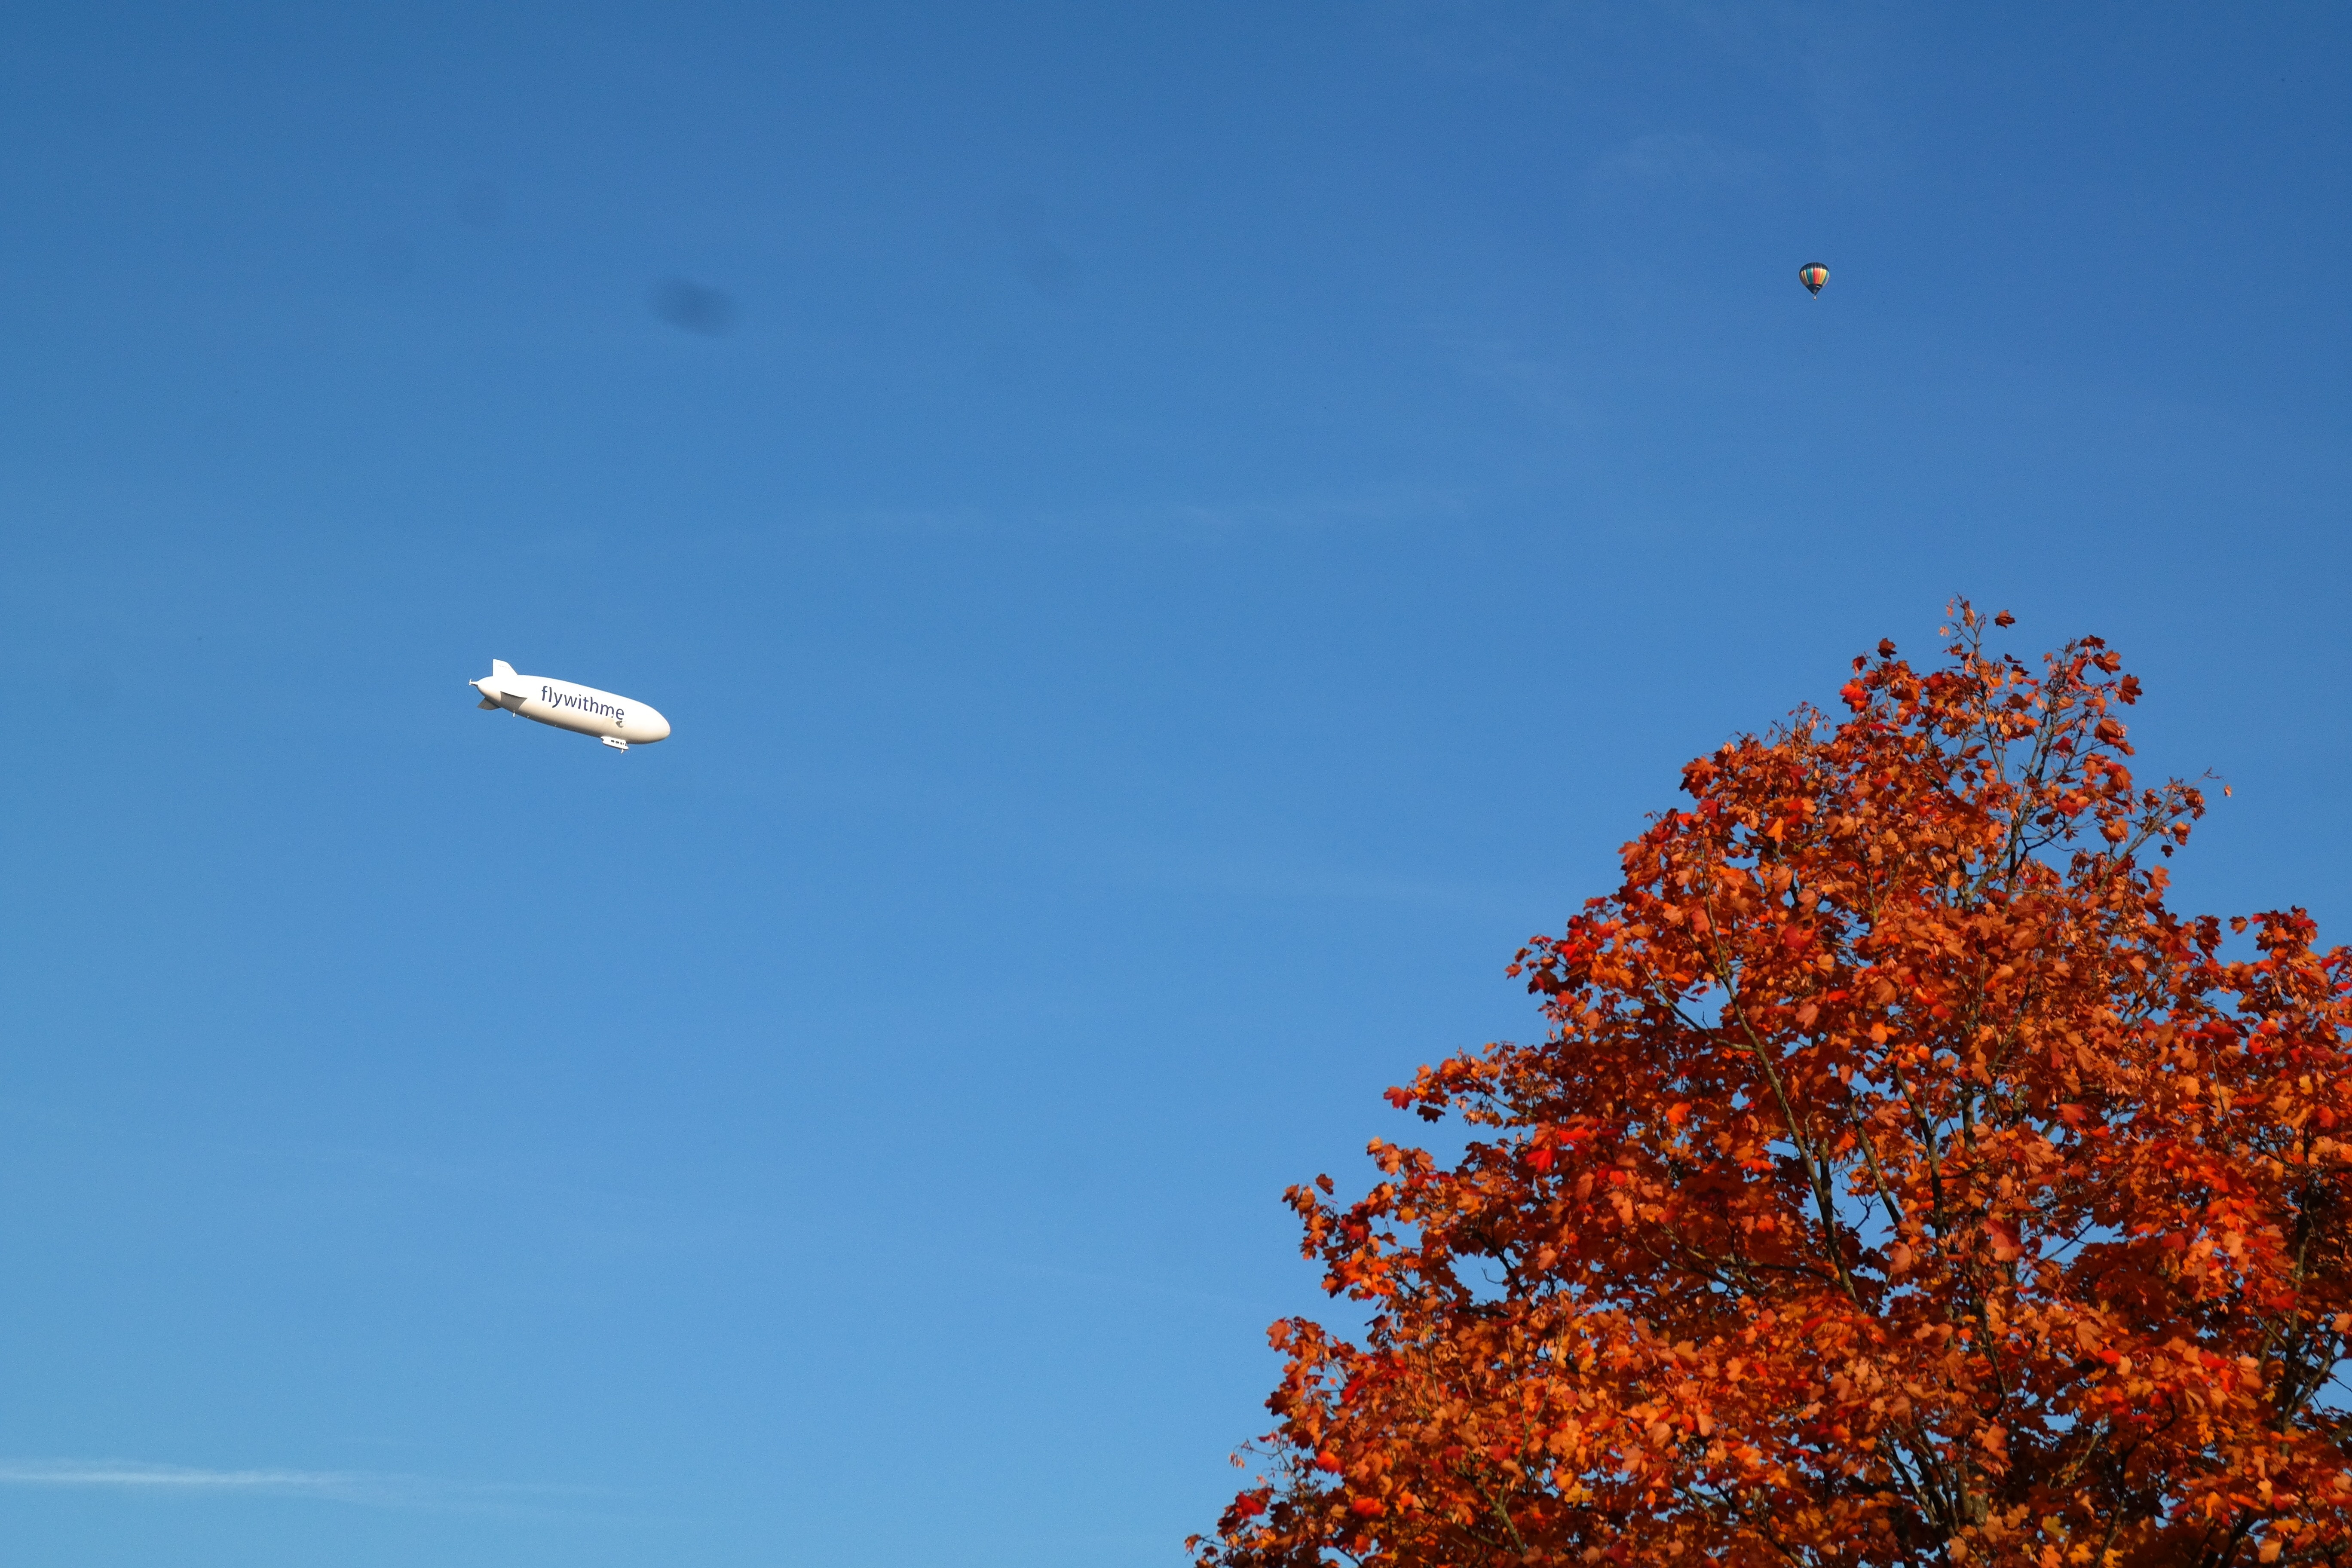 balloon plane near reddish-brown tree